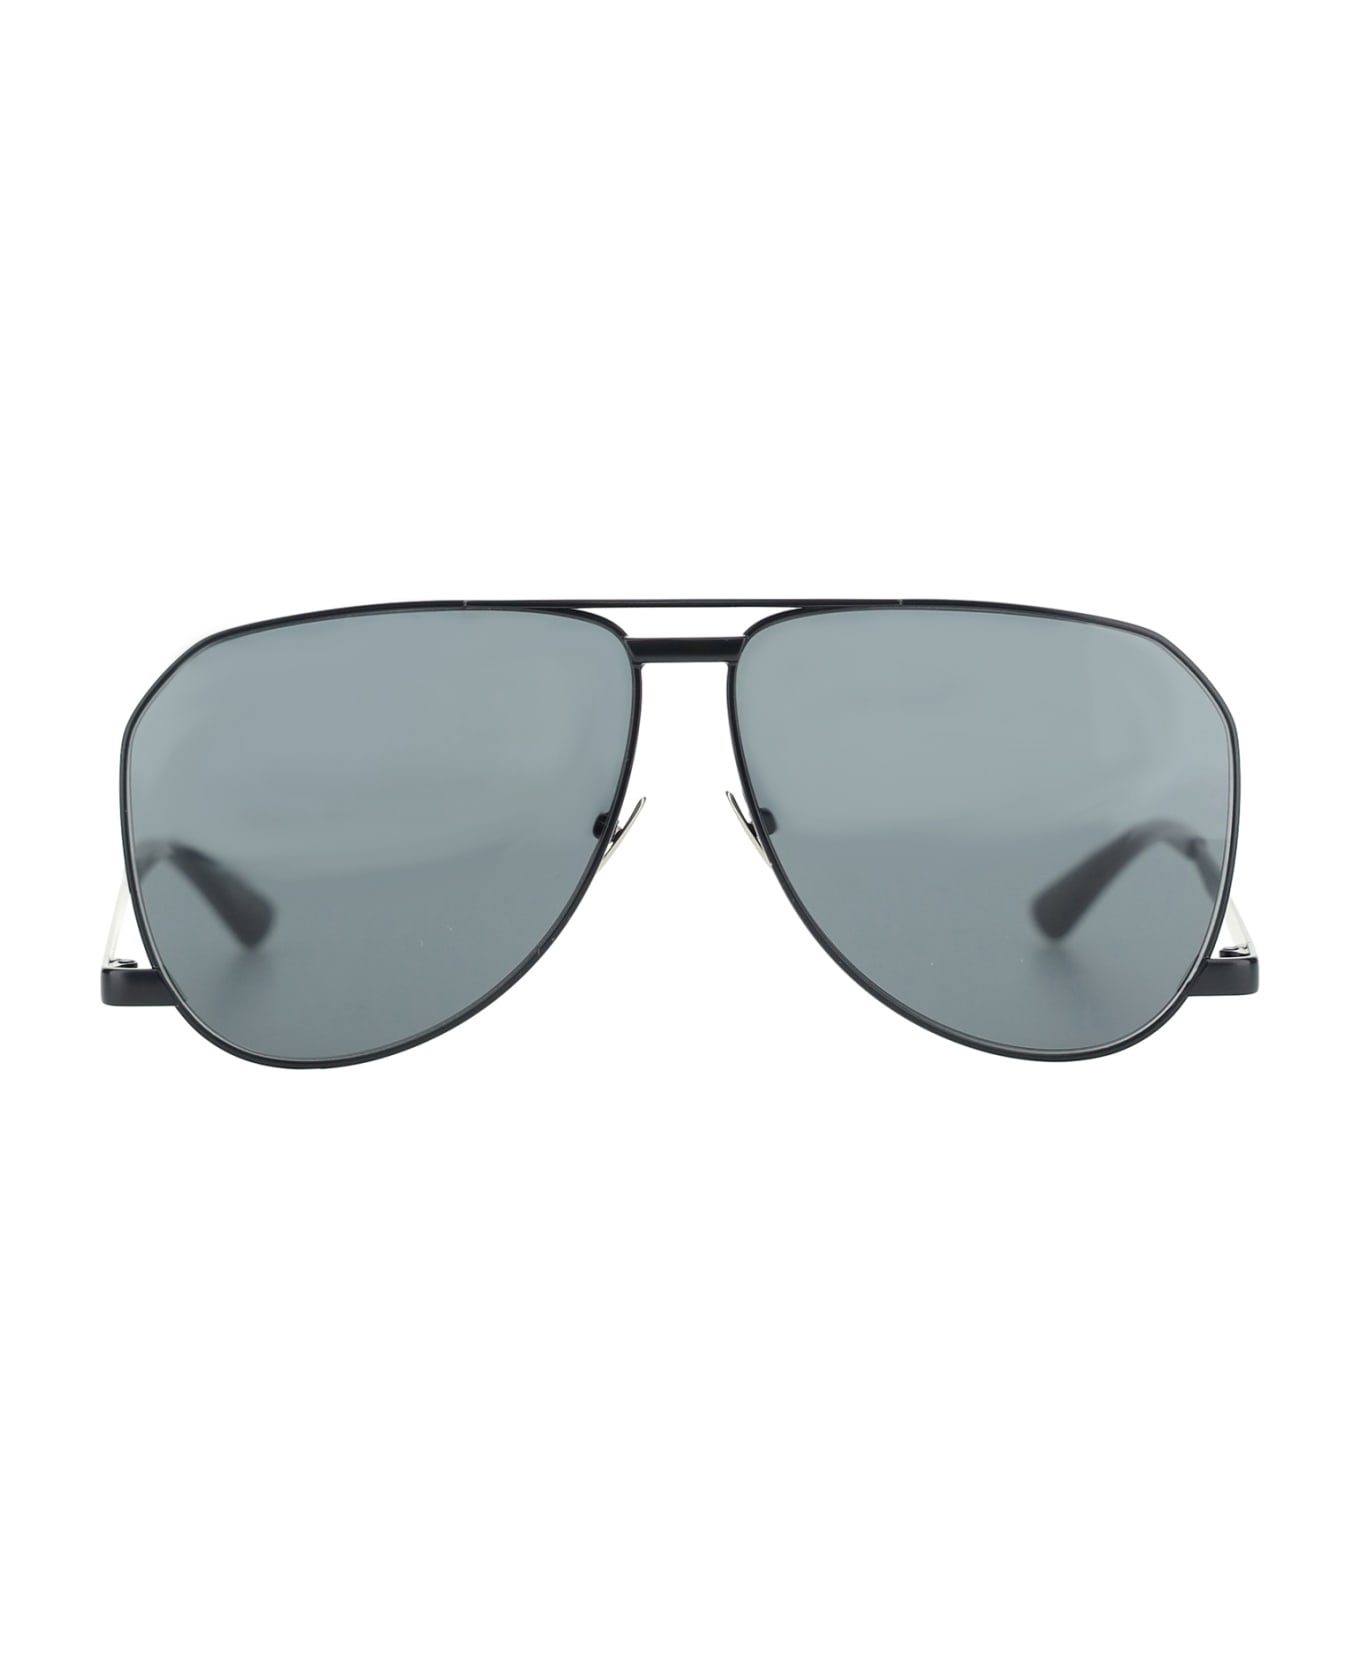 Saint Laurent Eyewear Sunglasses - Metal Black